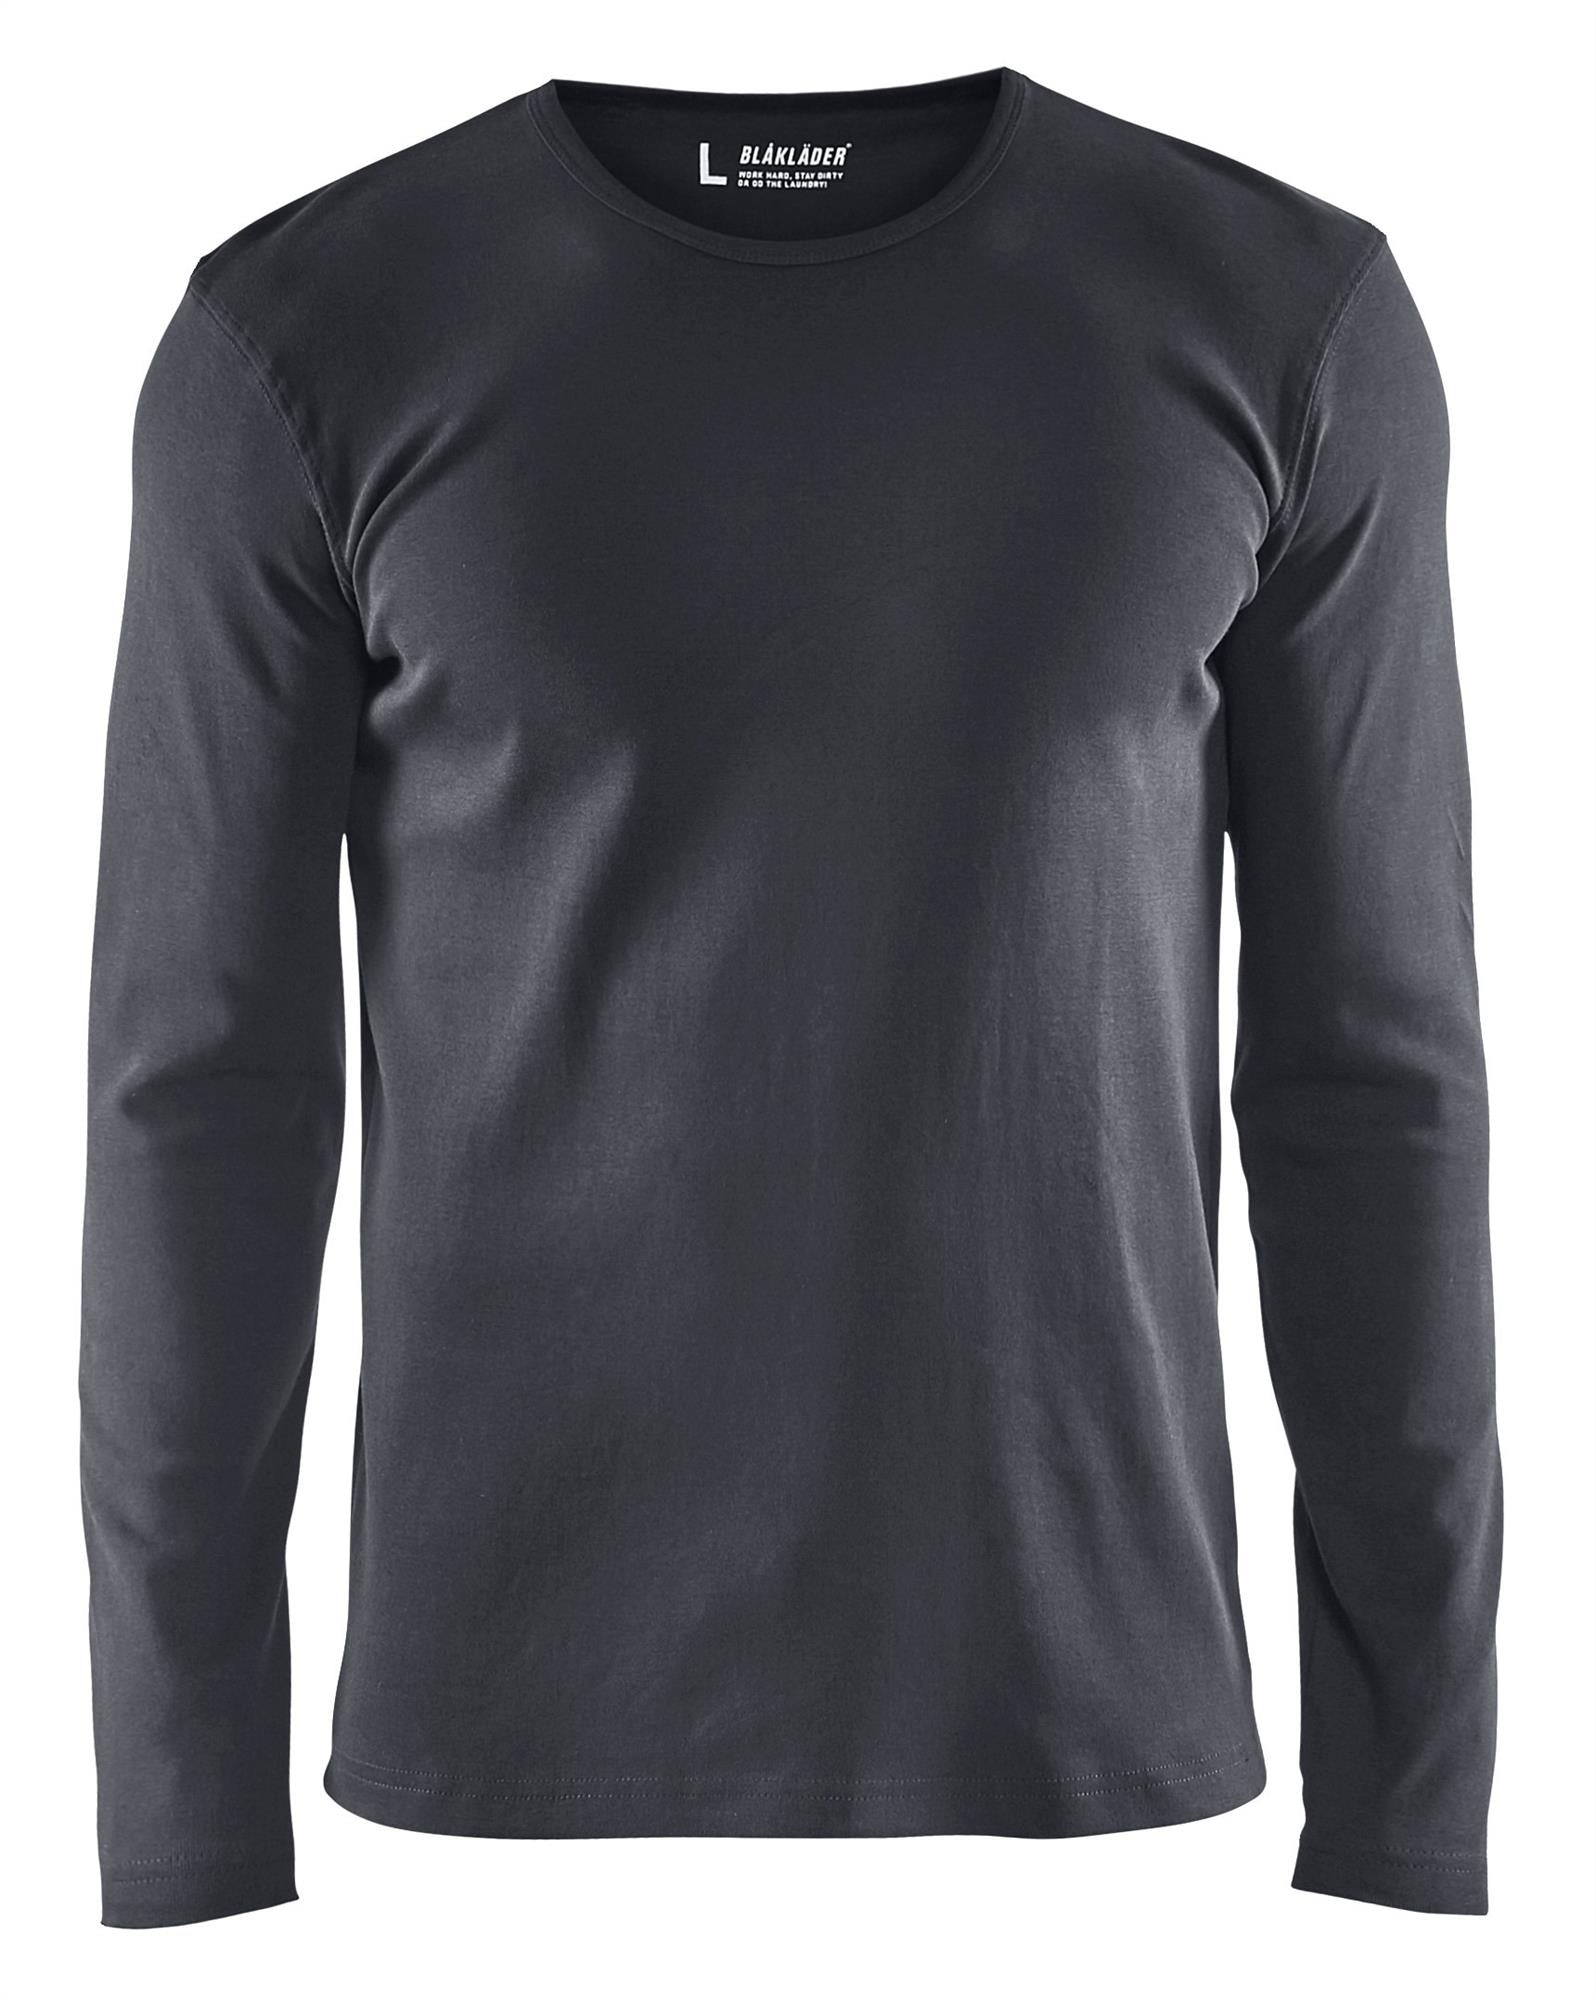 Blaklader dark grey men's cotton long-sleeve T-shirt #3314